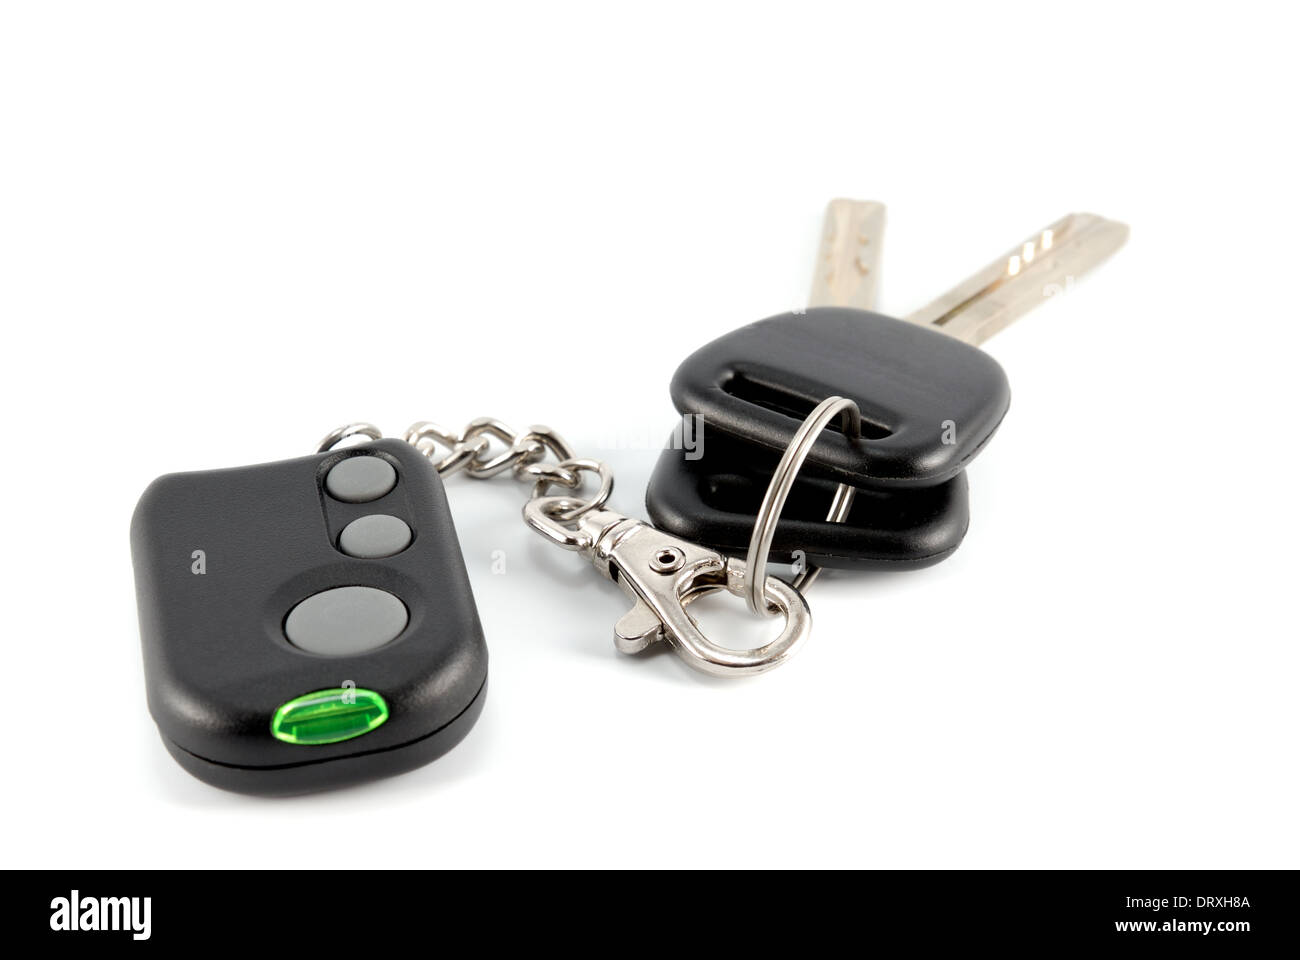 Car keys and charm from car alarm system Stock Photo